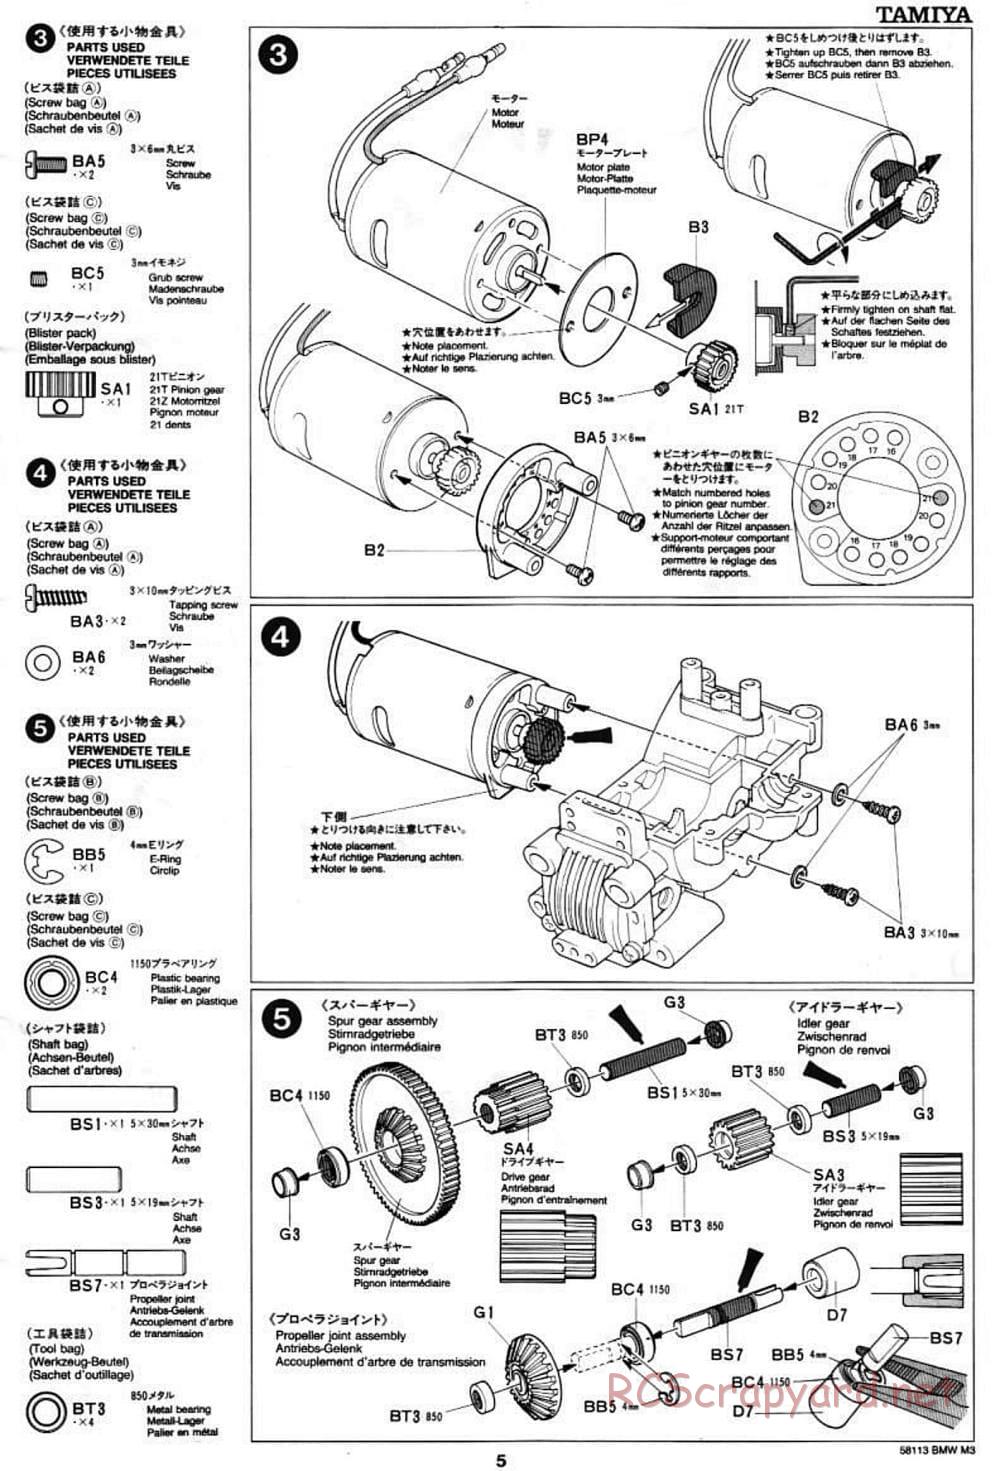 Tamiya - Schnitzer BMW M3 Sport Evo - TA-01 Chassis - Manual - Page 5